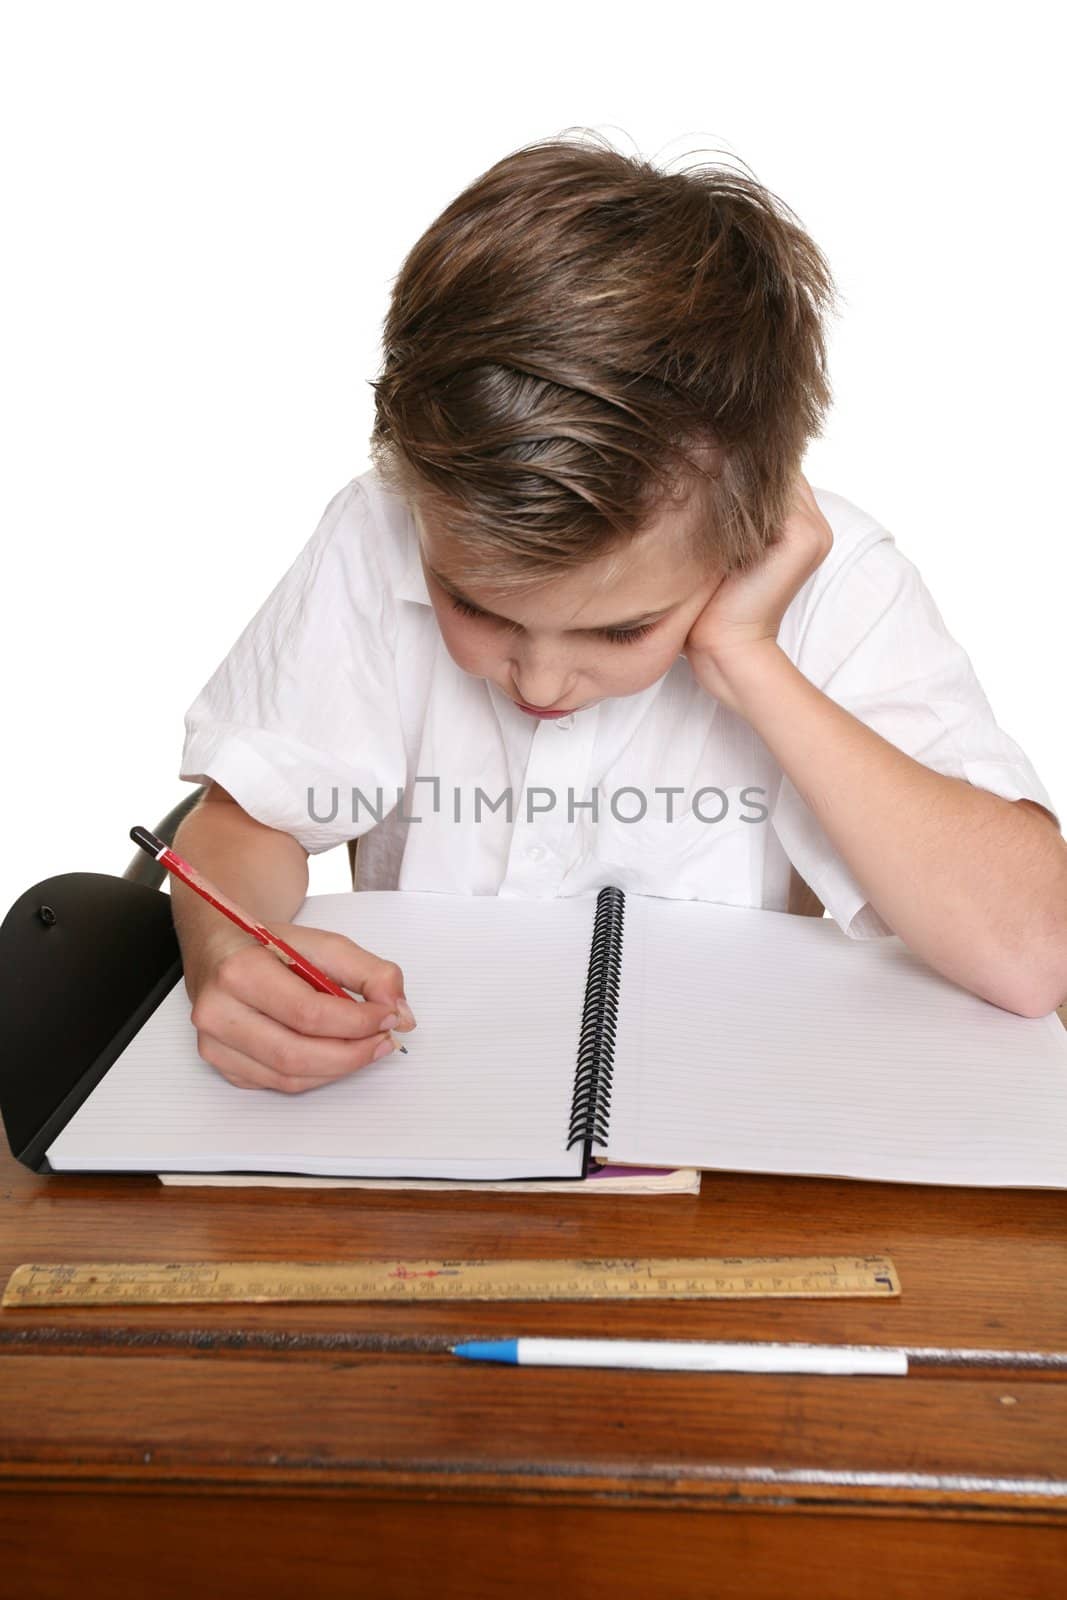 A school pupil sitting at desk doing classwork or homework.